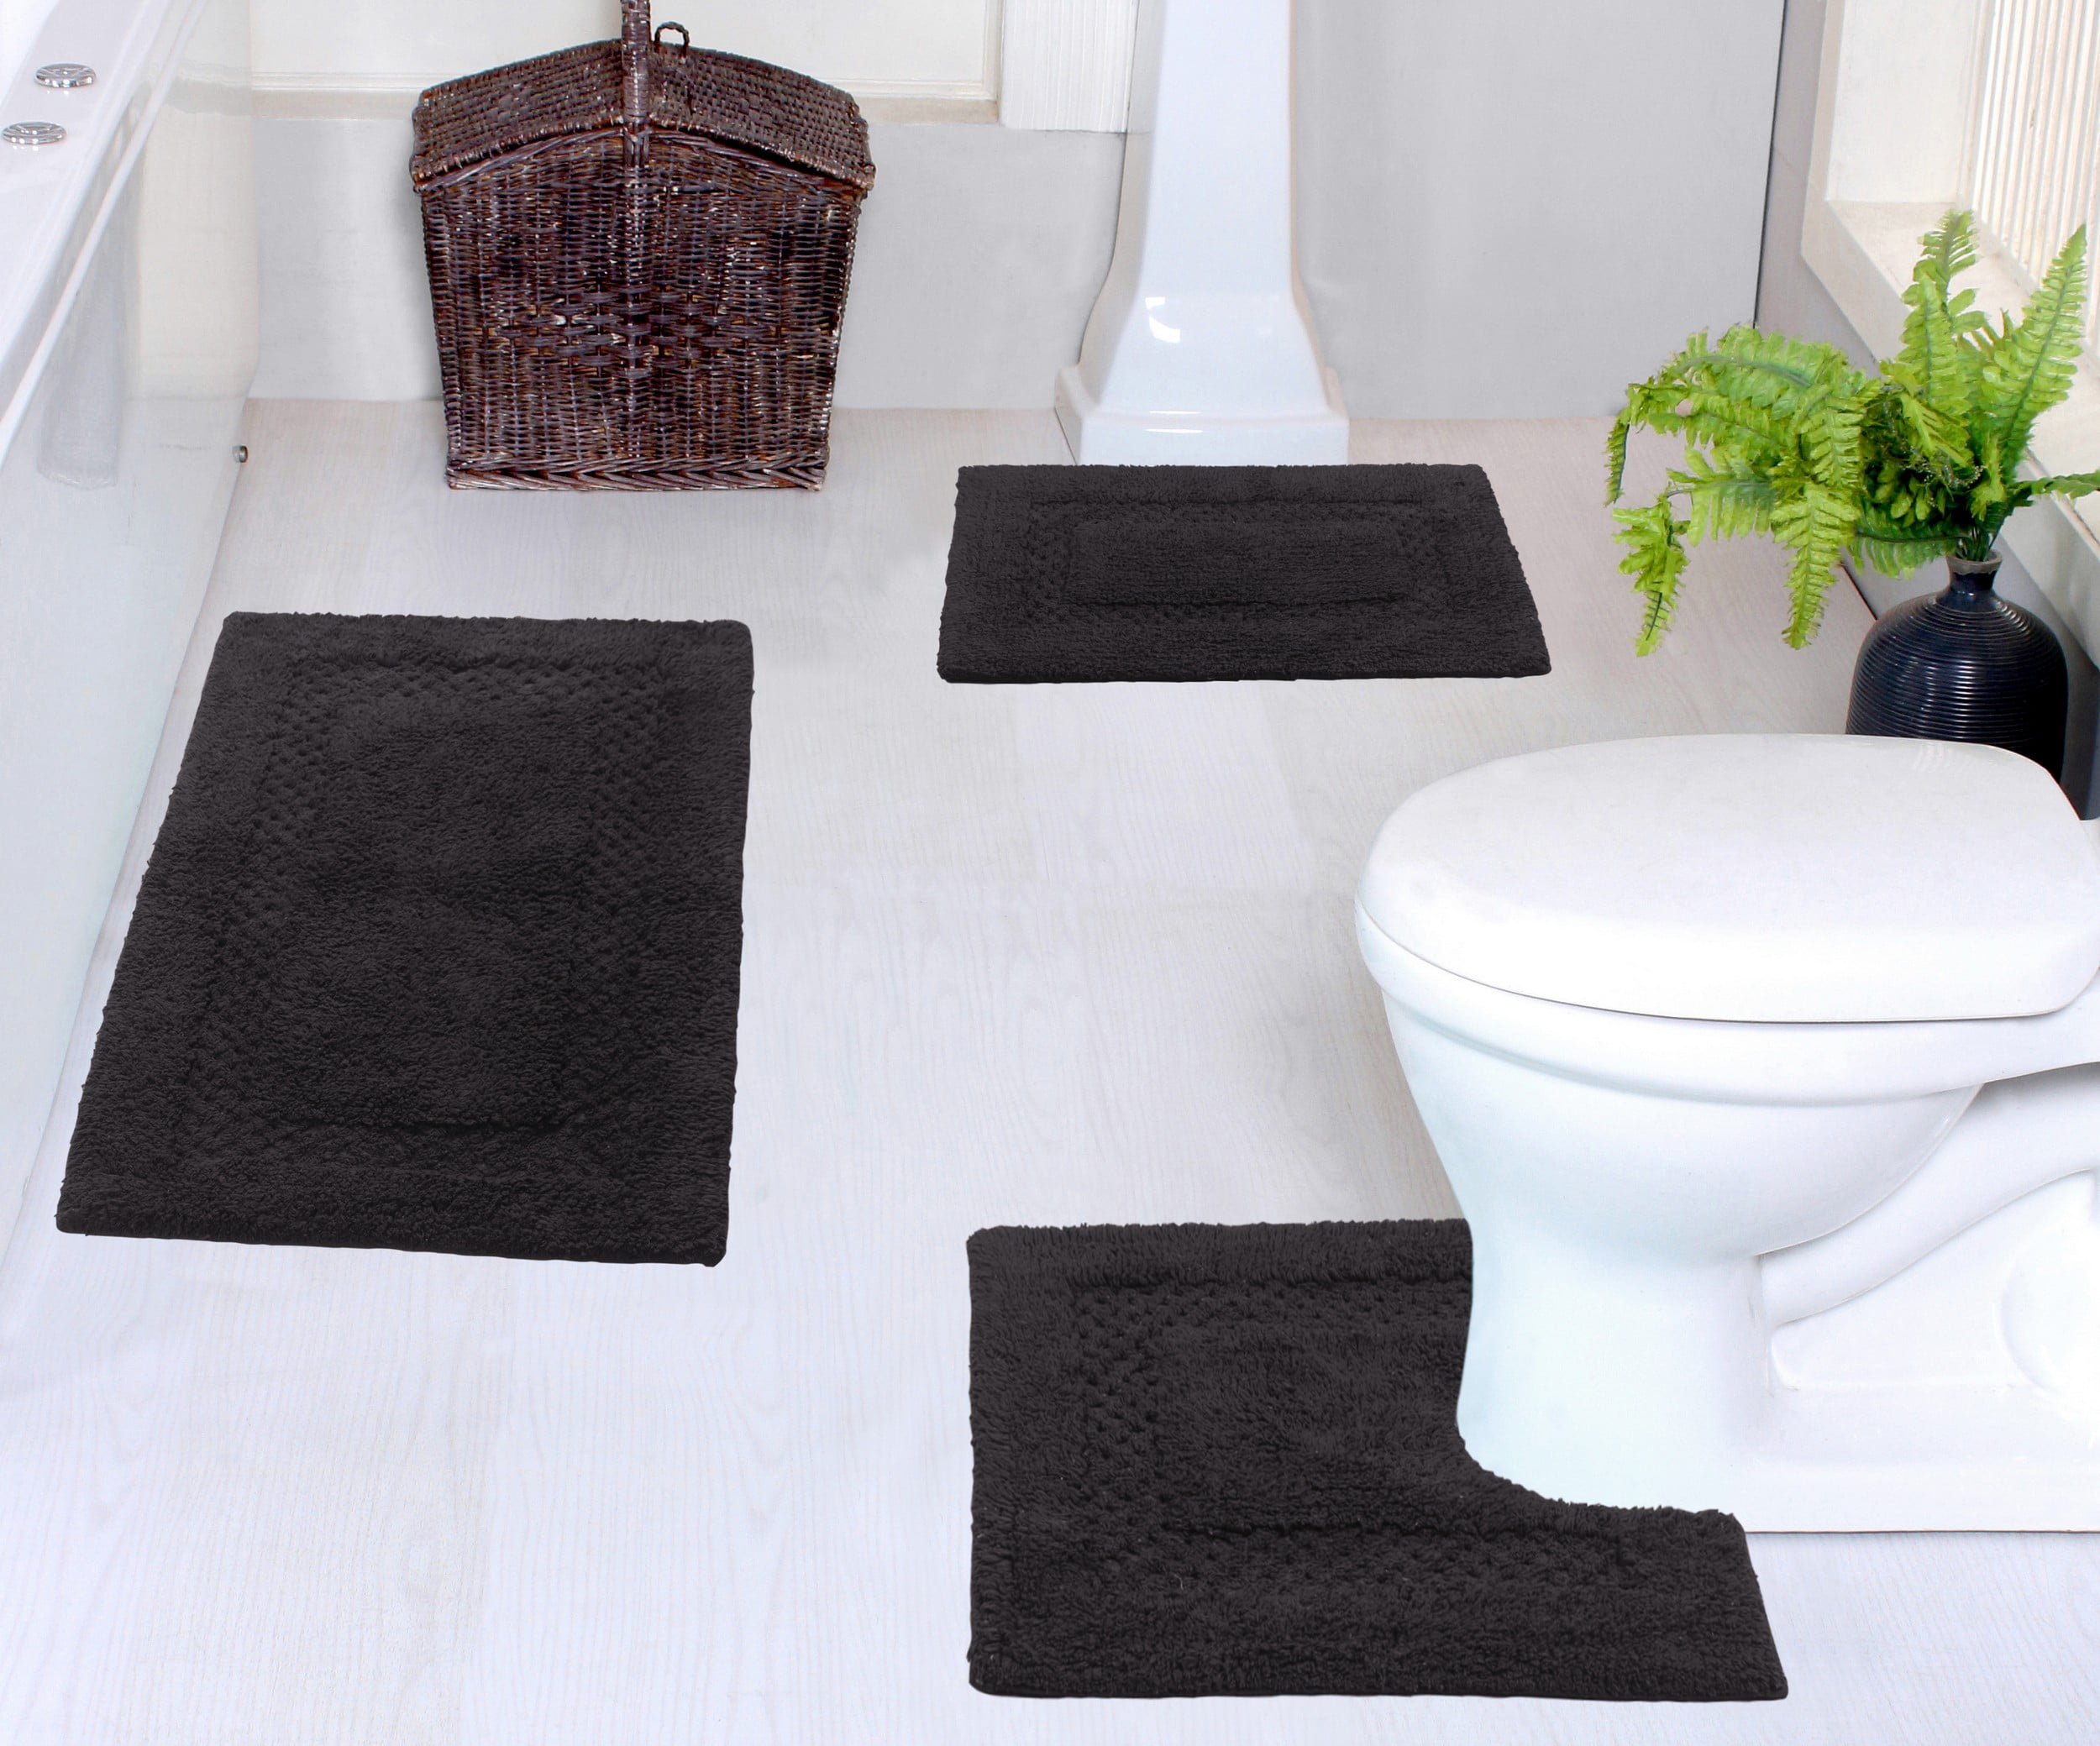 Home Weavers Classy Bathmat Collection 100 % Absorbent Soft Cotton 3 Piece Bath Rug Set with Contour, White